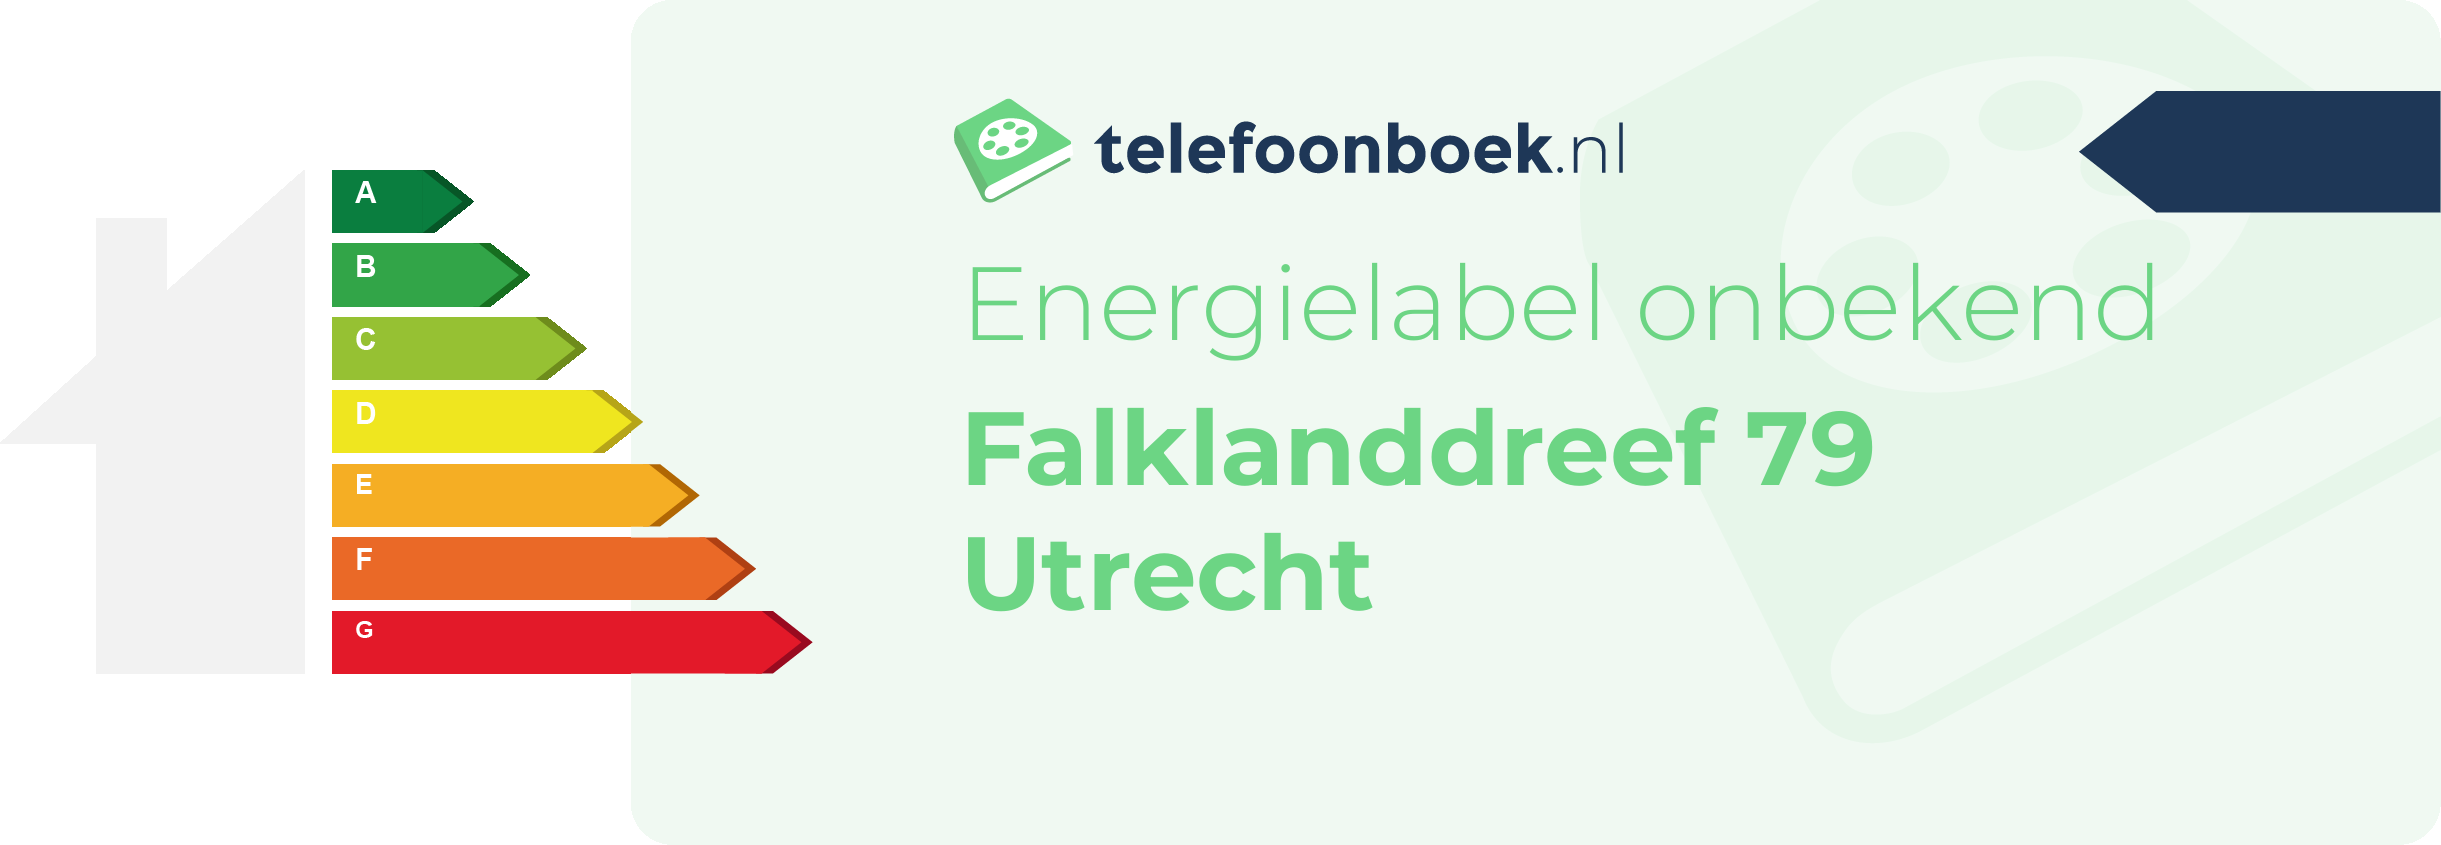 Energielabel Falklanddreef 79 Utrecht